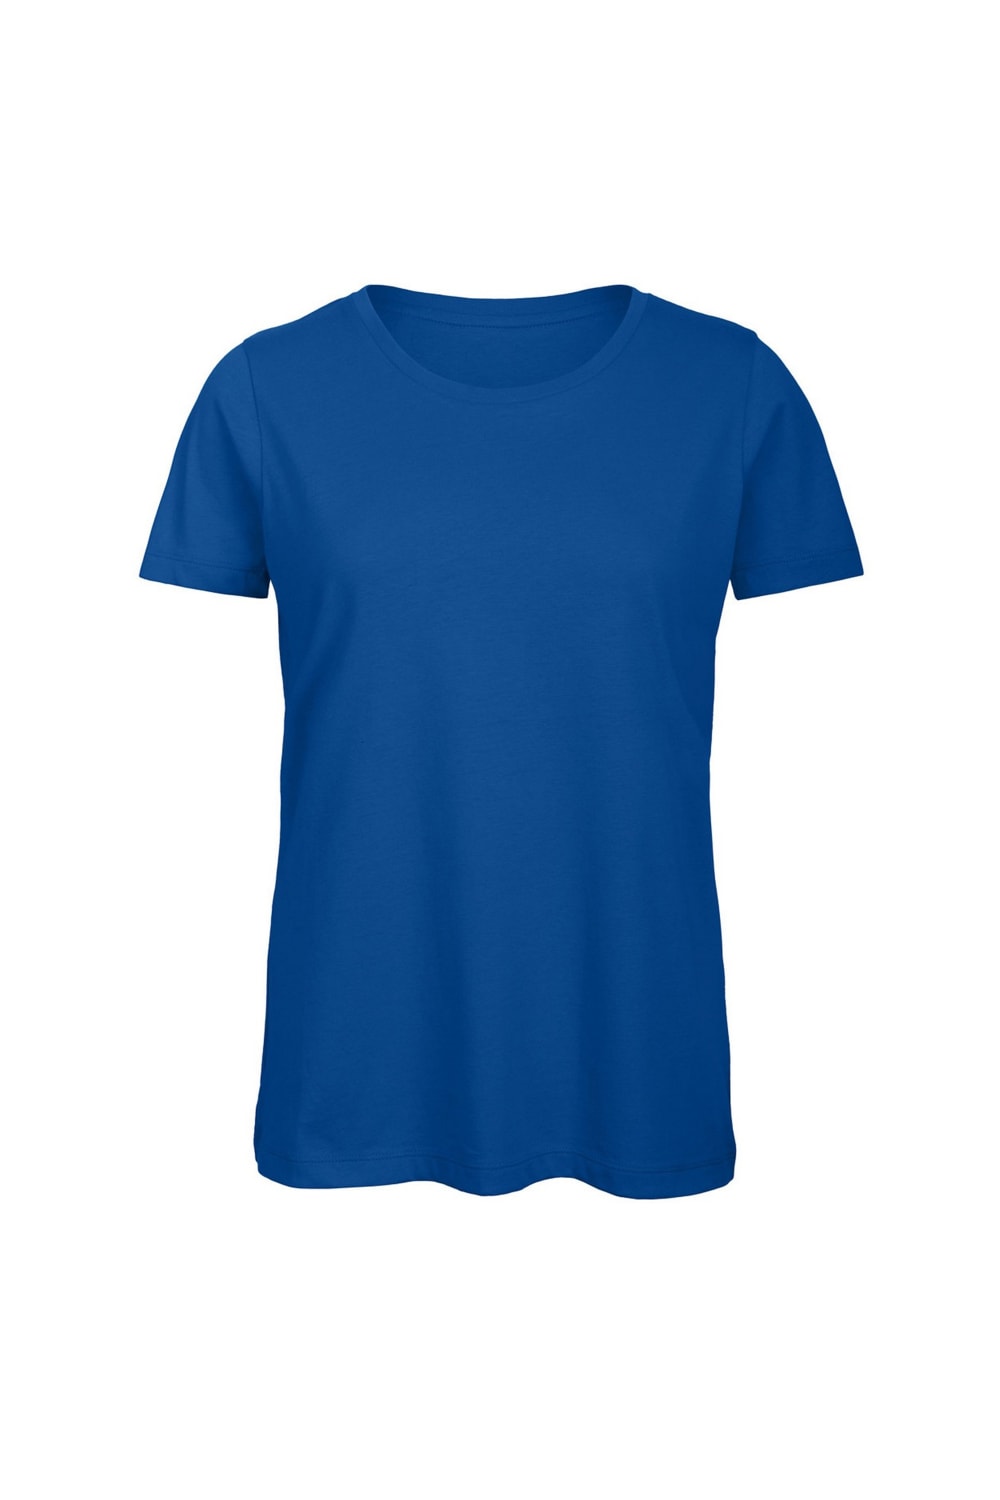 B&C Womens/Ladies Favourite Organic Cotton Crew T-Shirt (Royal)